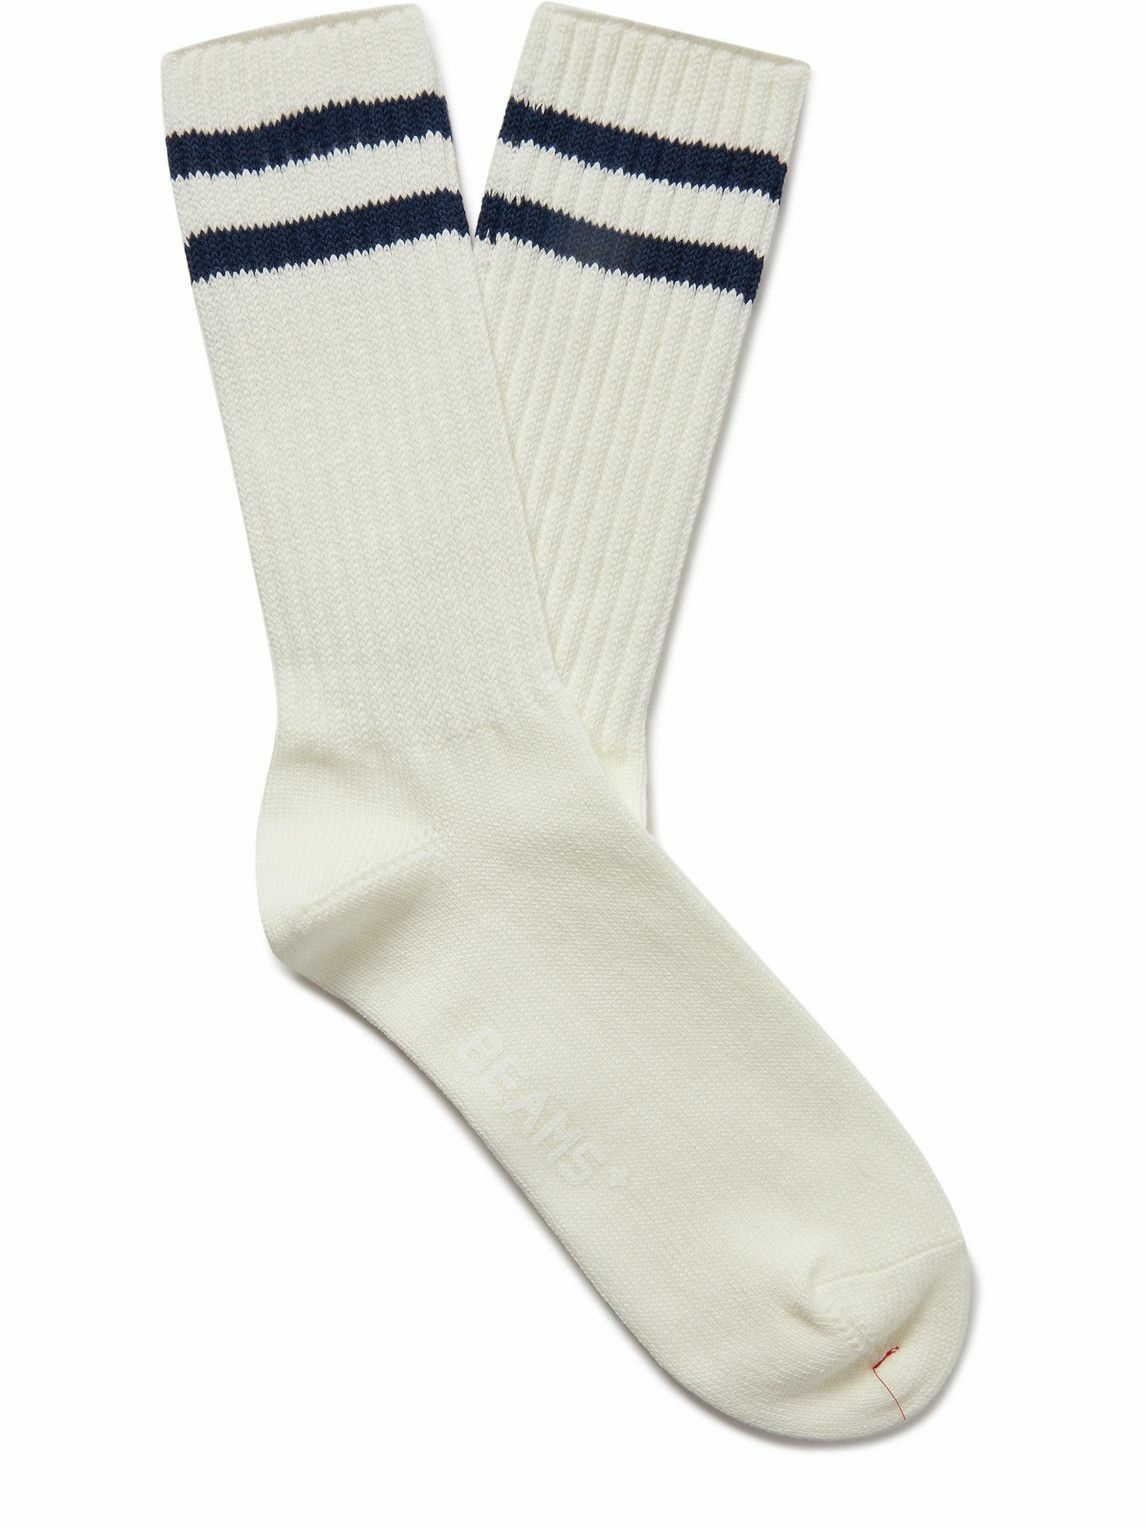 Beams Plus - Schoolboy Striped Ribbed Cotton-Blend Socks Beams Plus